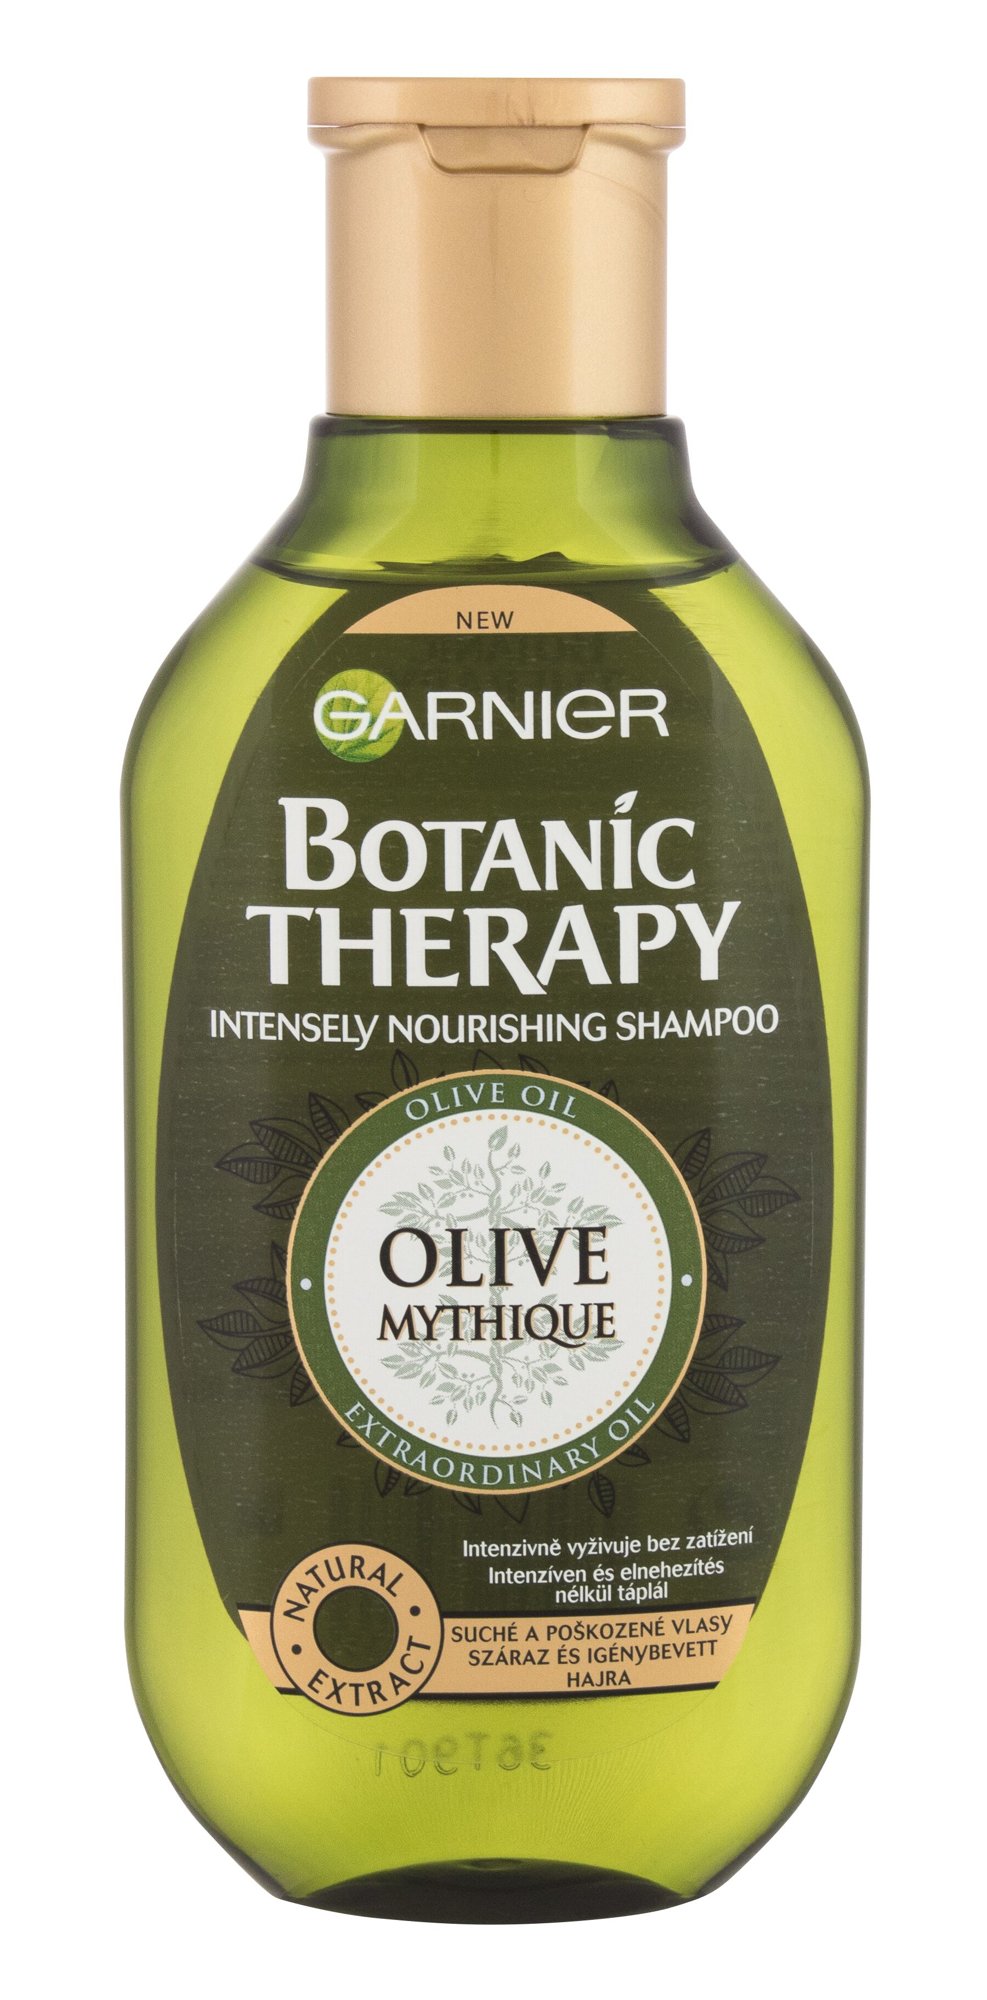 Garnier Botanic Therapy Olive Mythique 250ml šampūnas